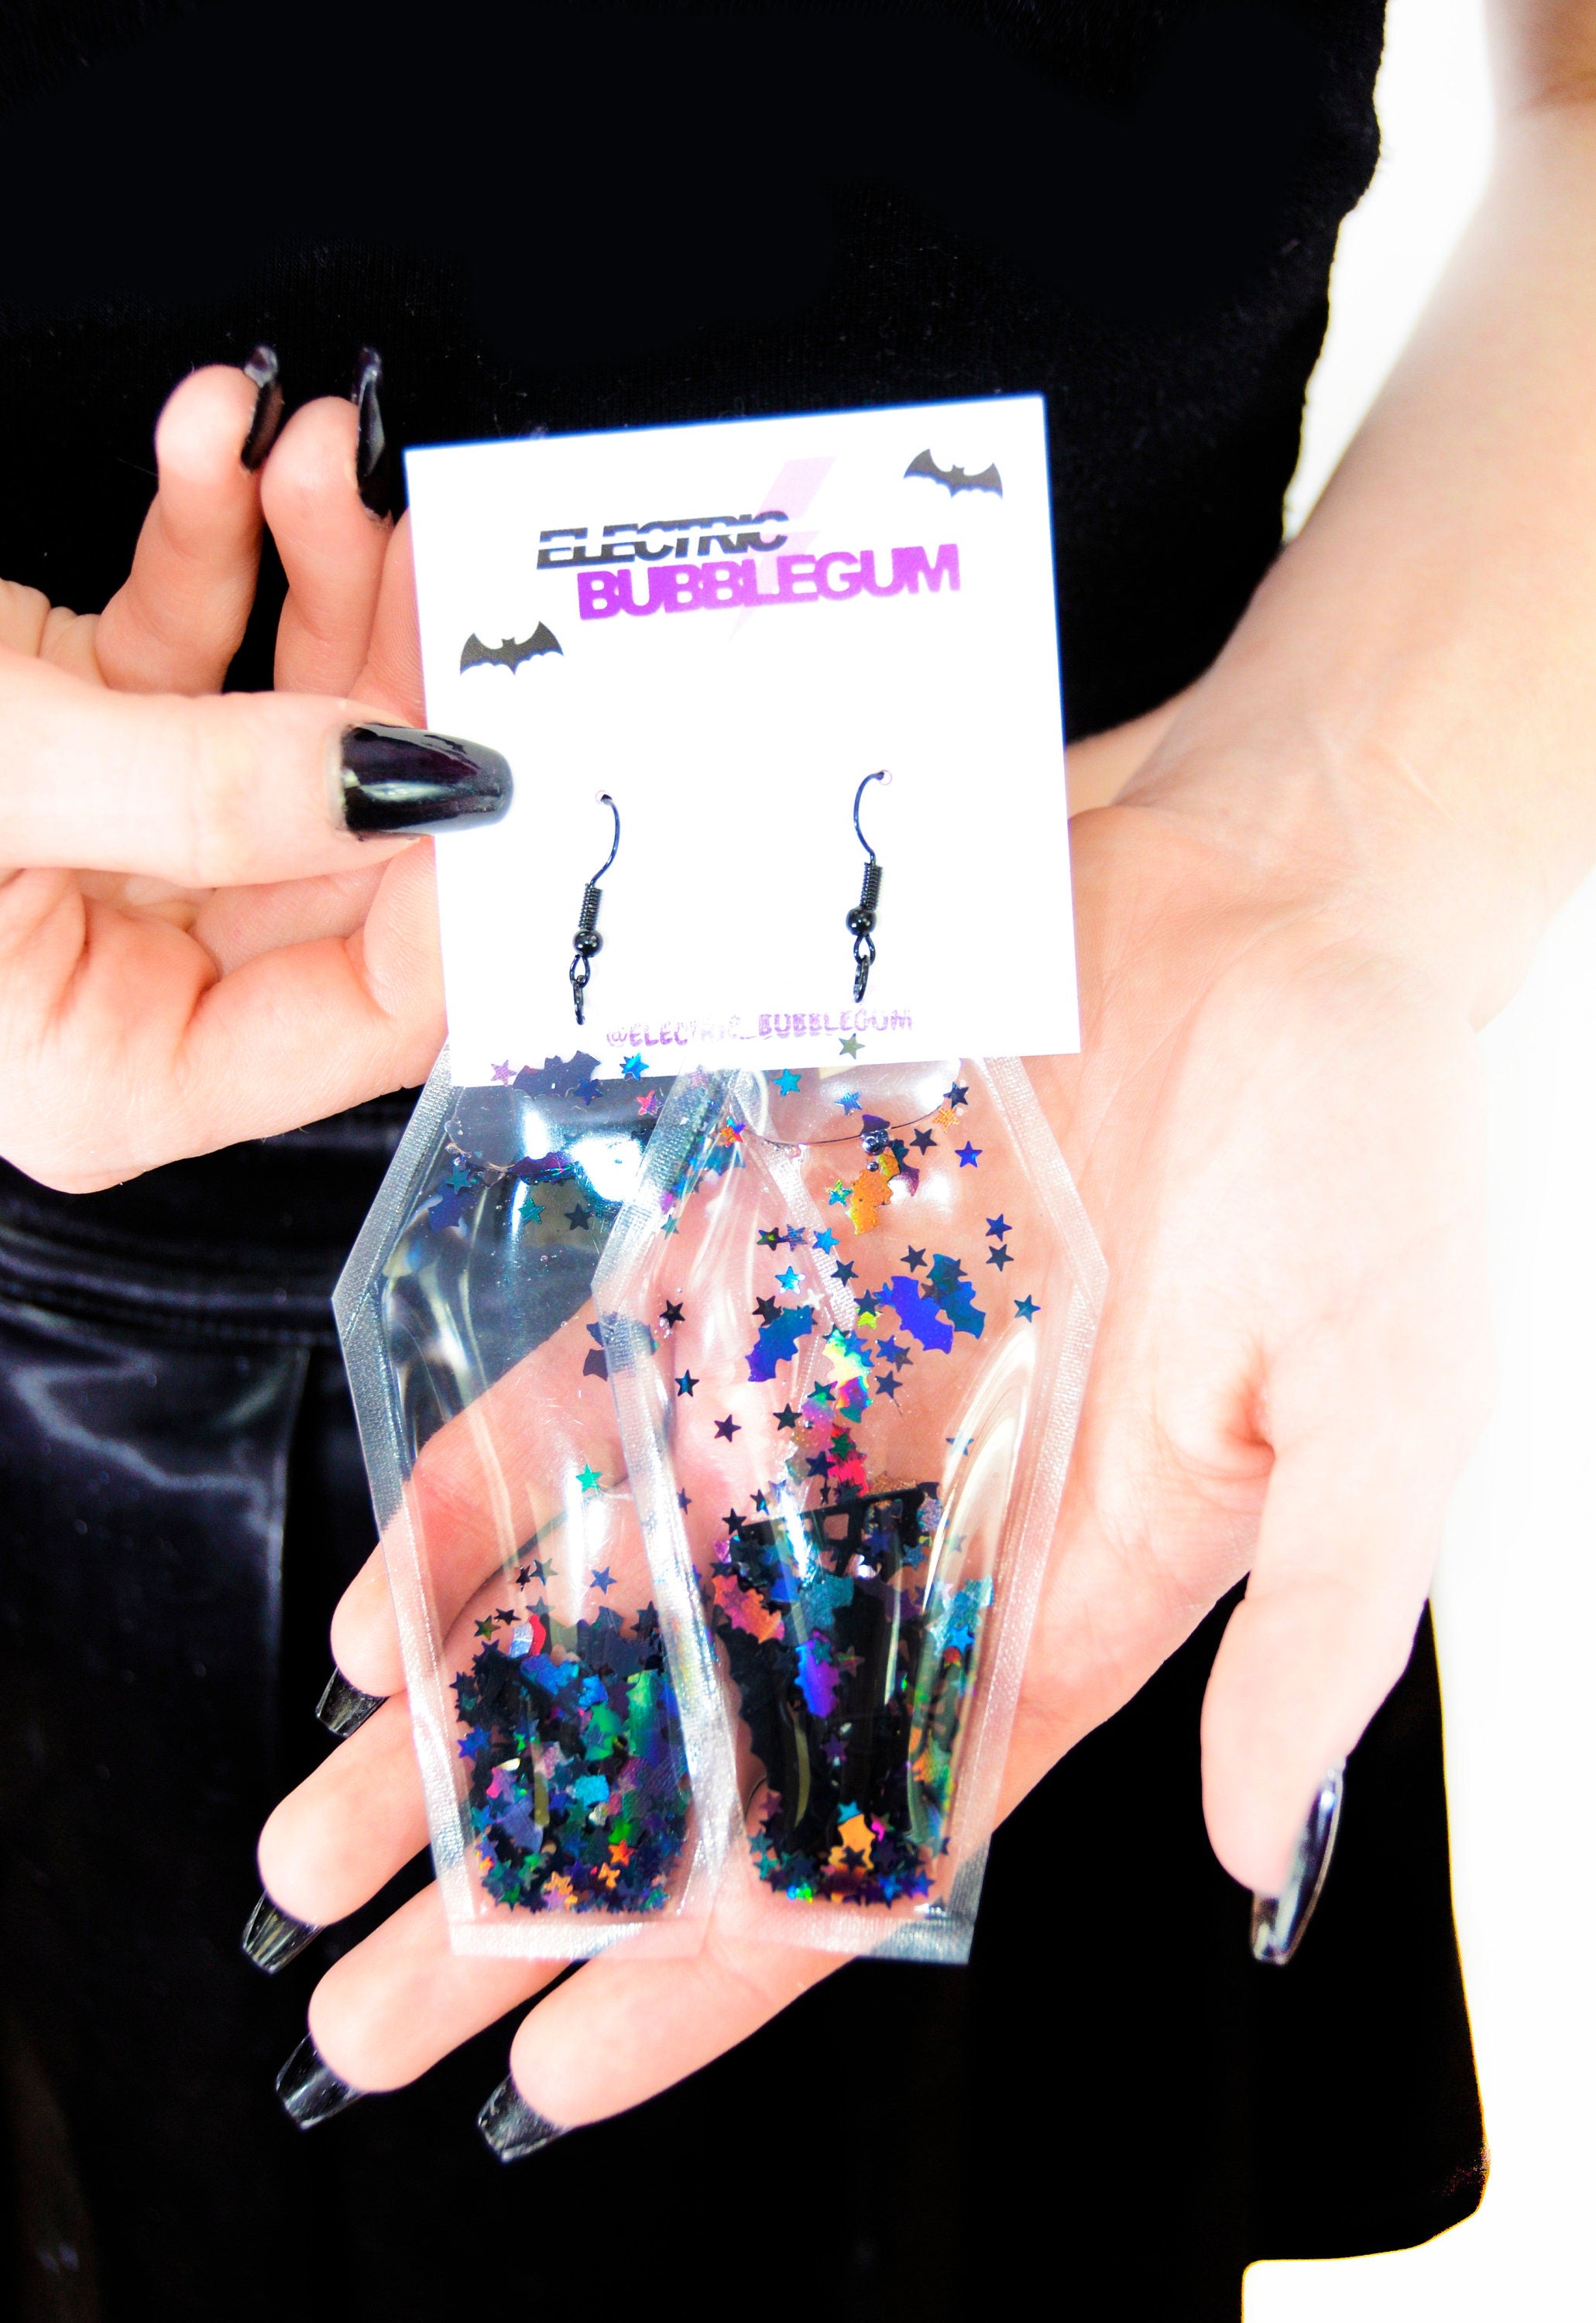 Liquid Glitter Coffin Earrings - Living Dead Girl - Electric Bubblegum